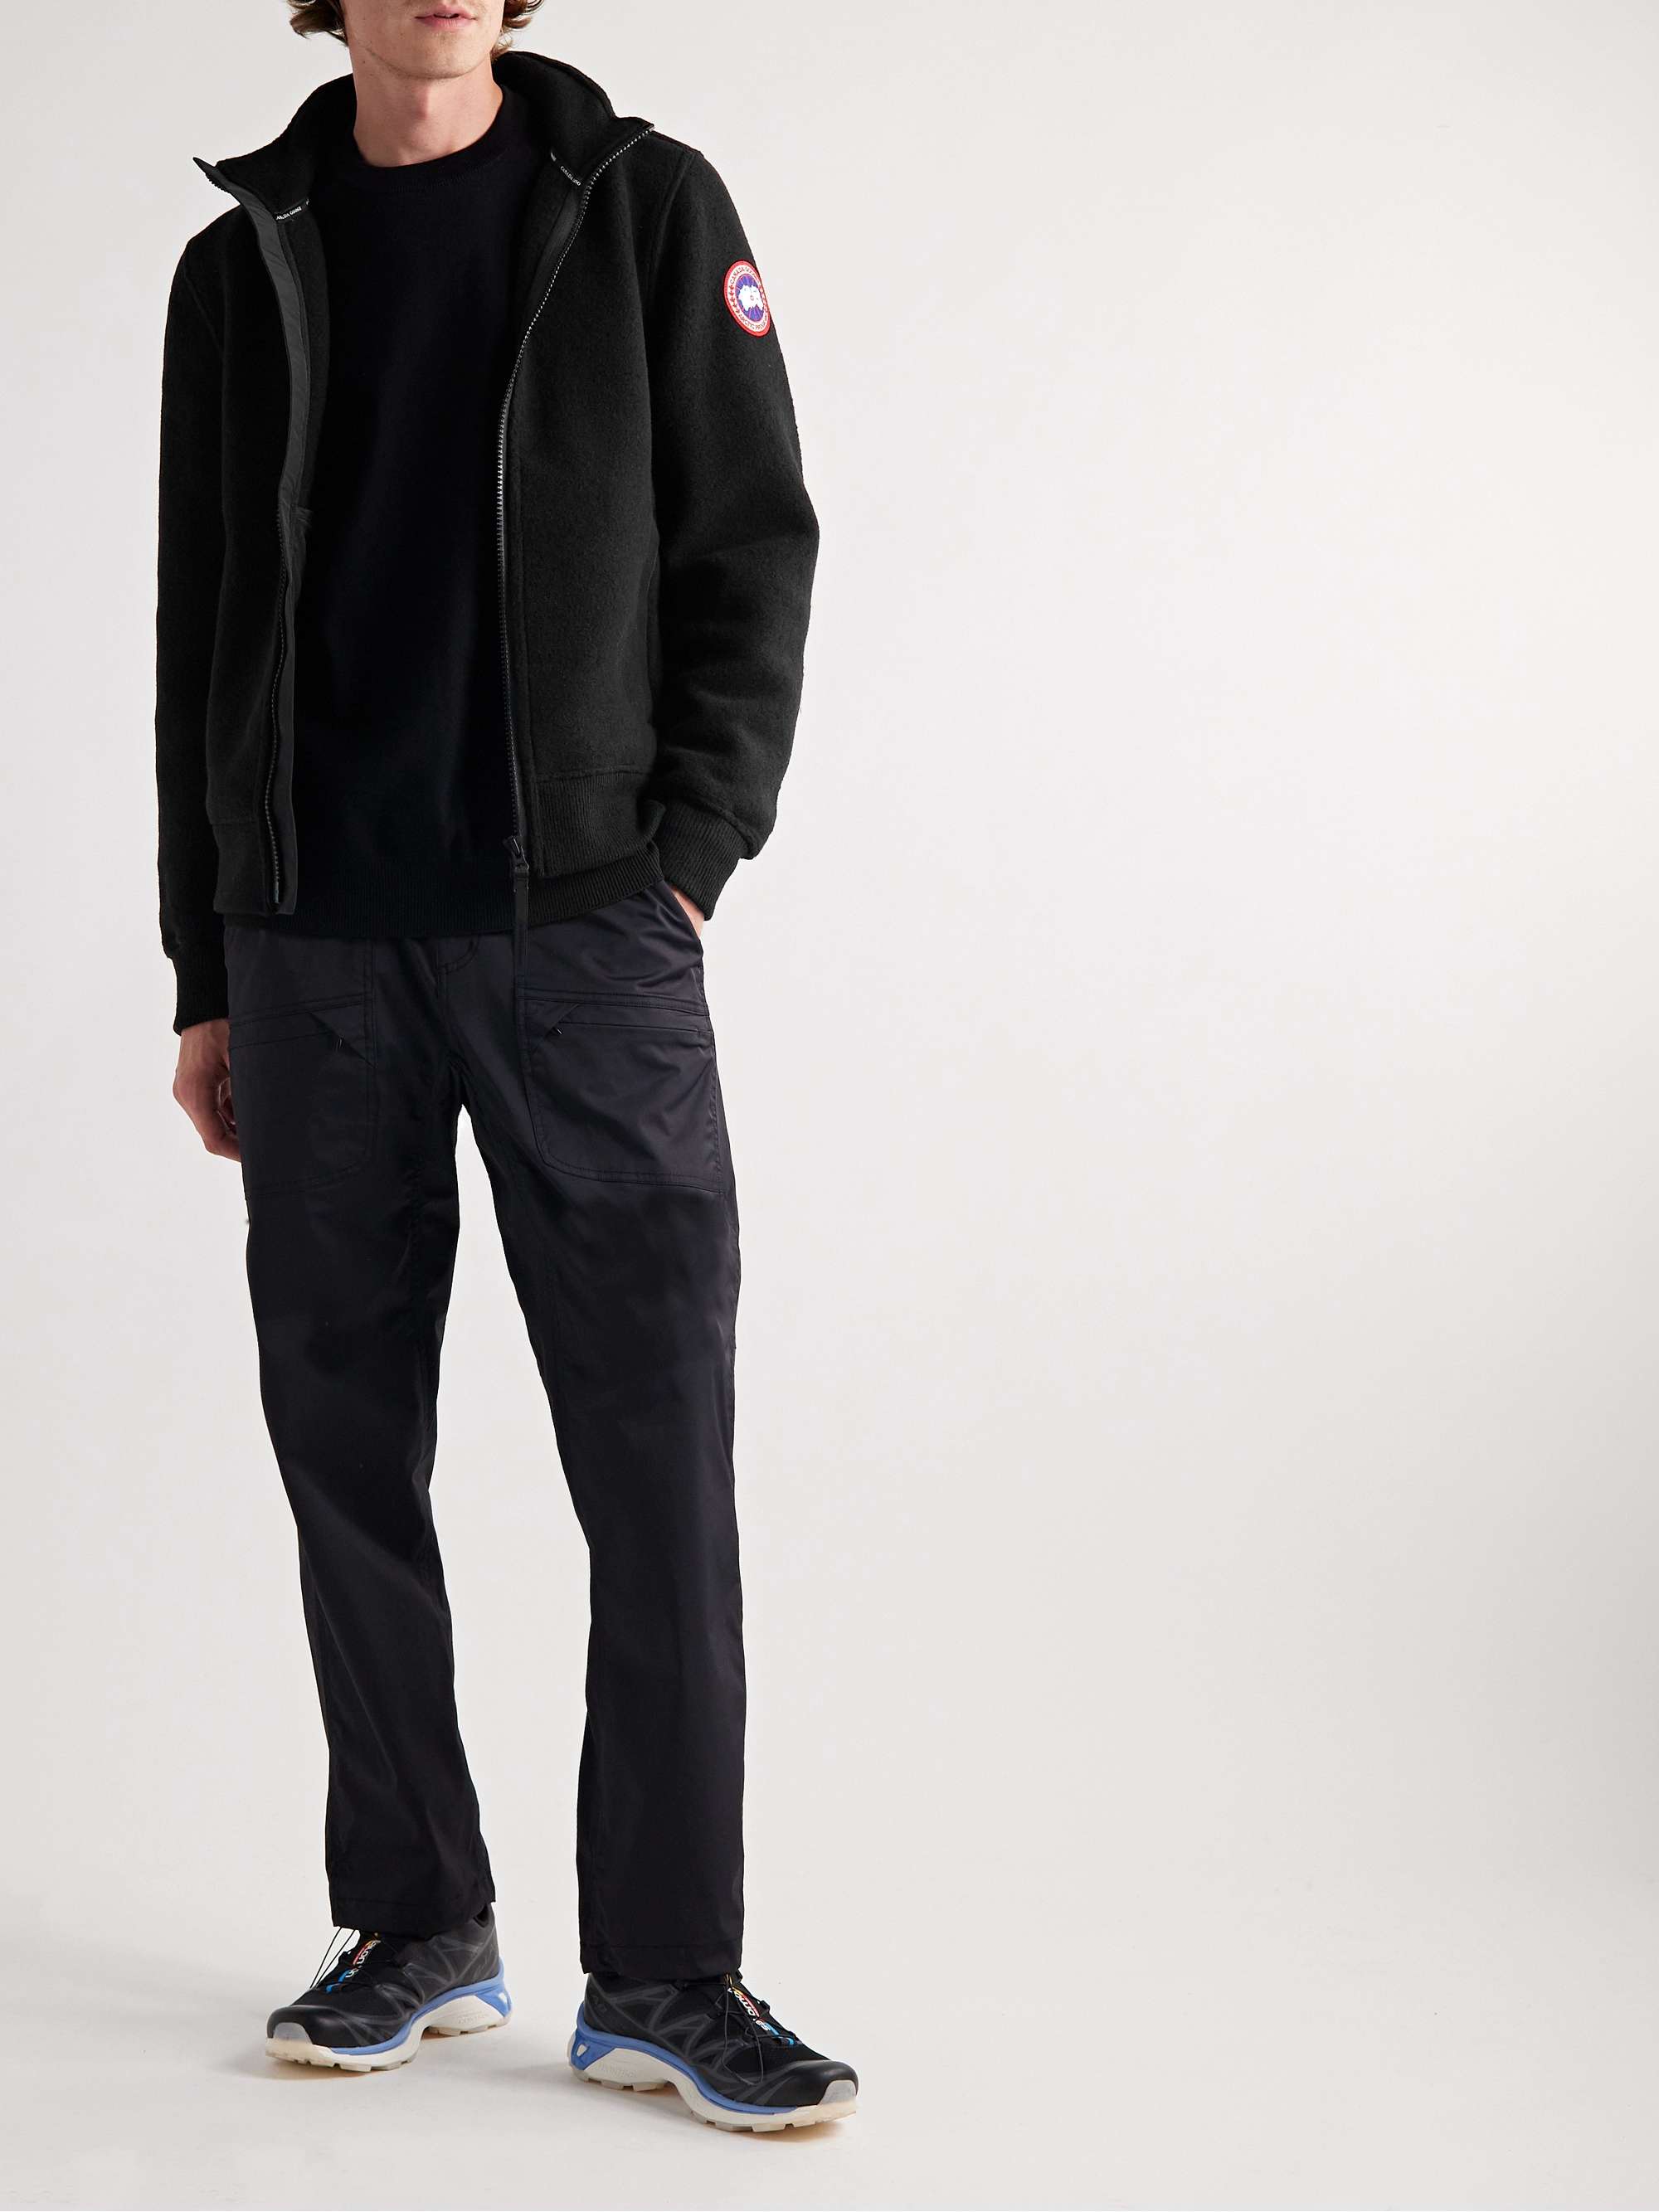 CANADA GOOSE Lawson Recycled Wool-Blend Fleece Jacket for Men | MR PORTER